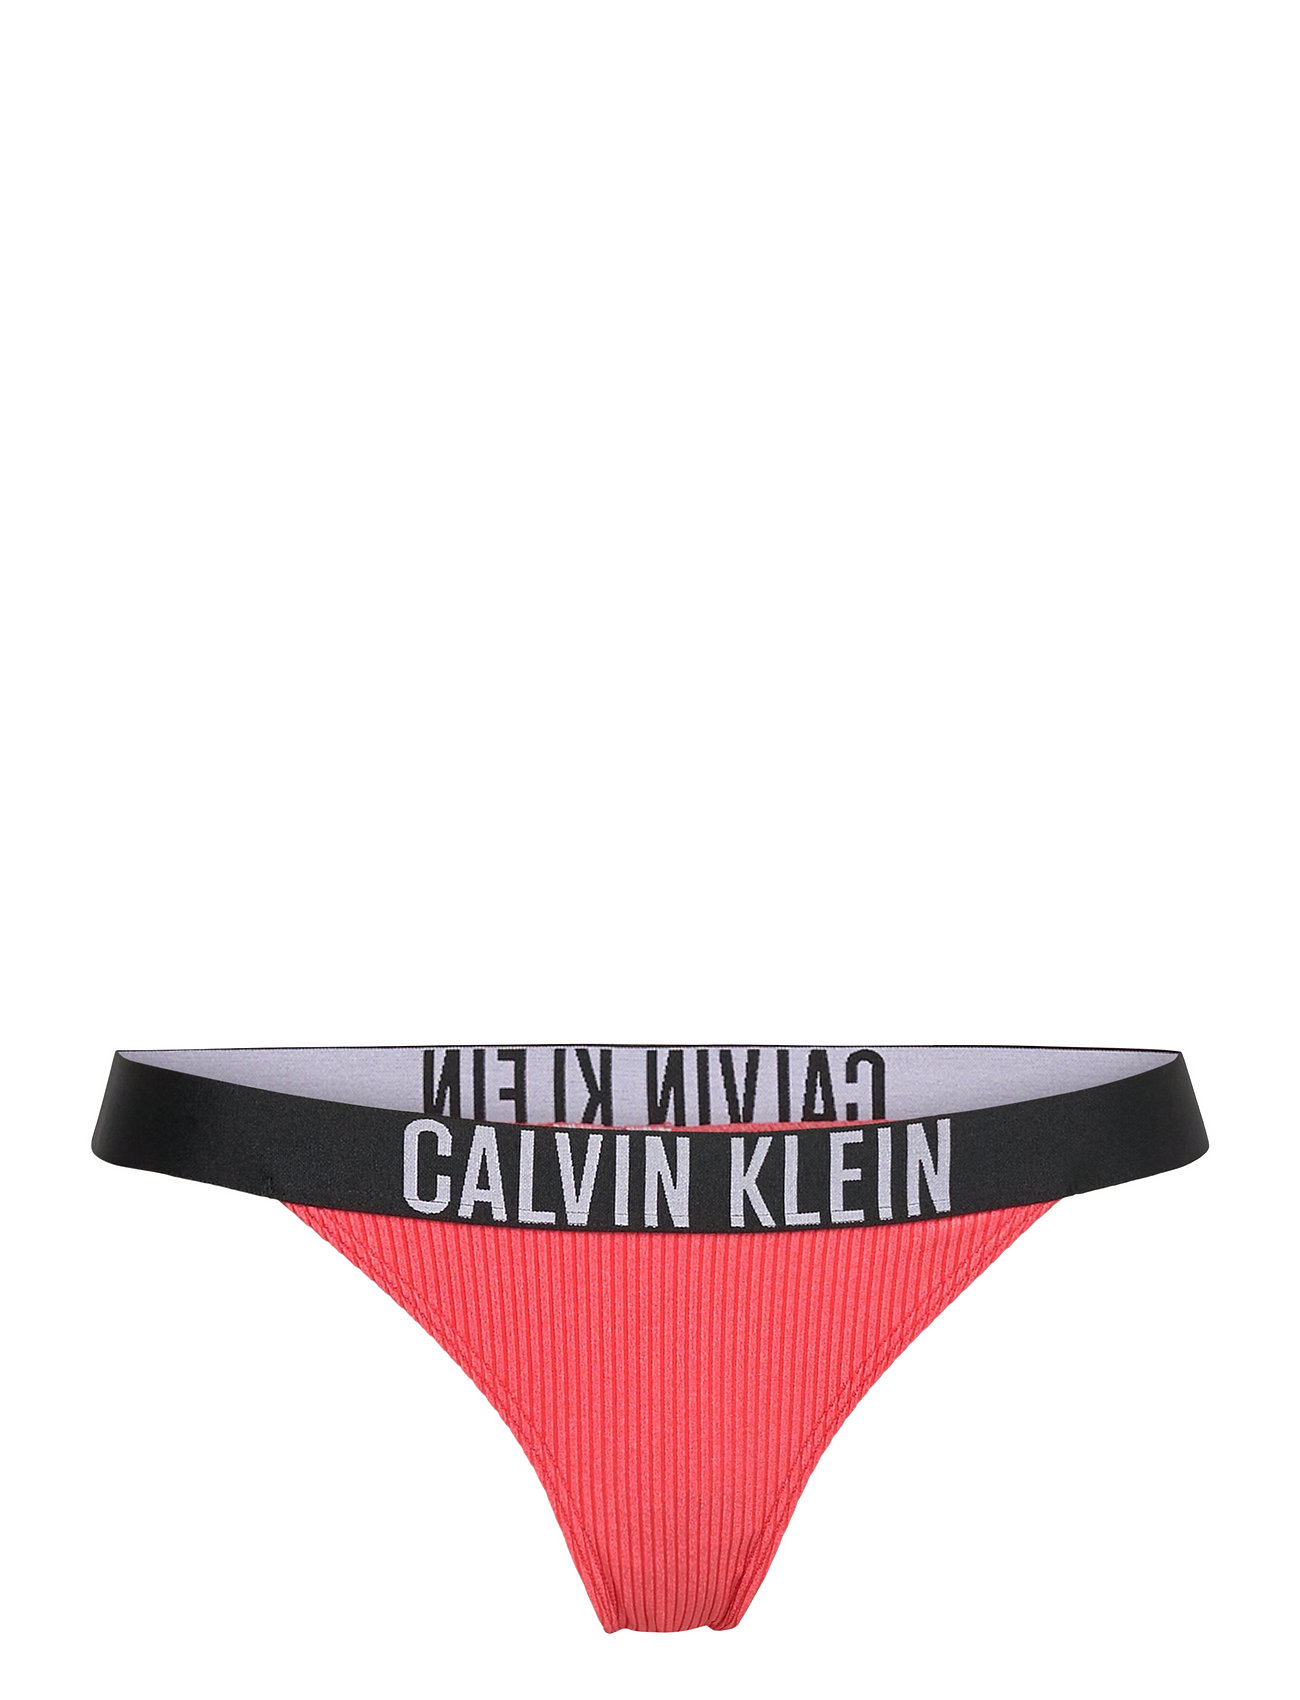 vernieuwen ziekenhuis plaats Calvin Klein Brazilian - Bikini bottoms - Boozt.com